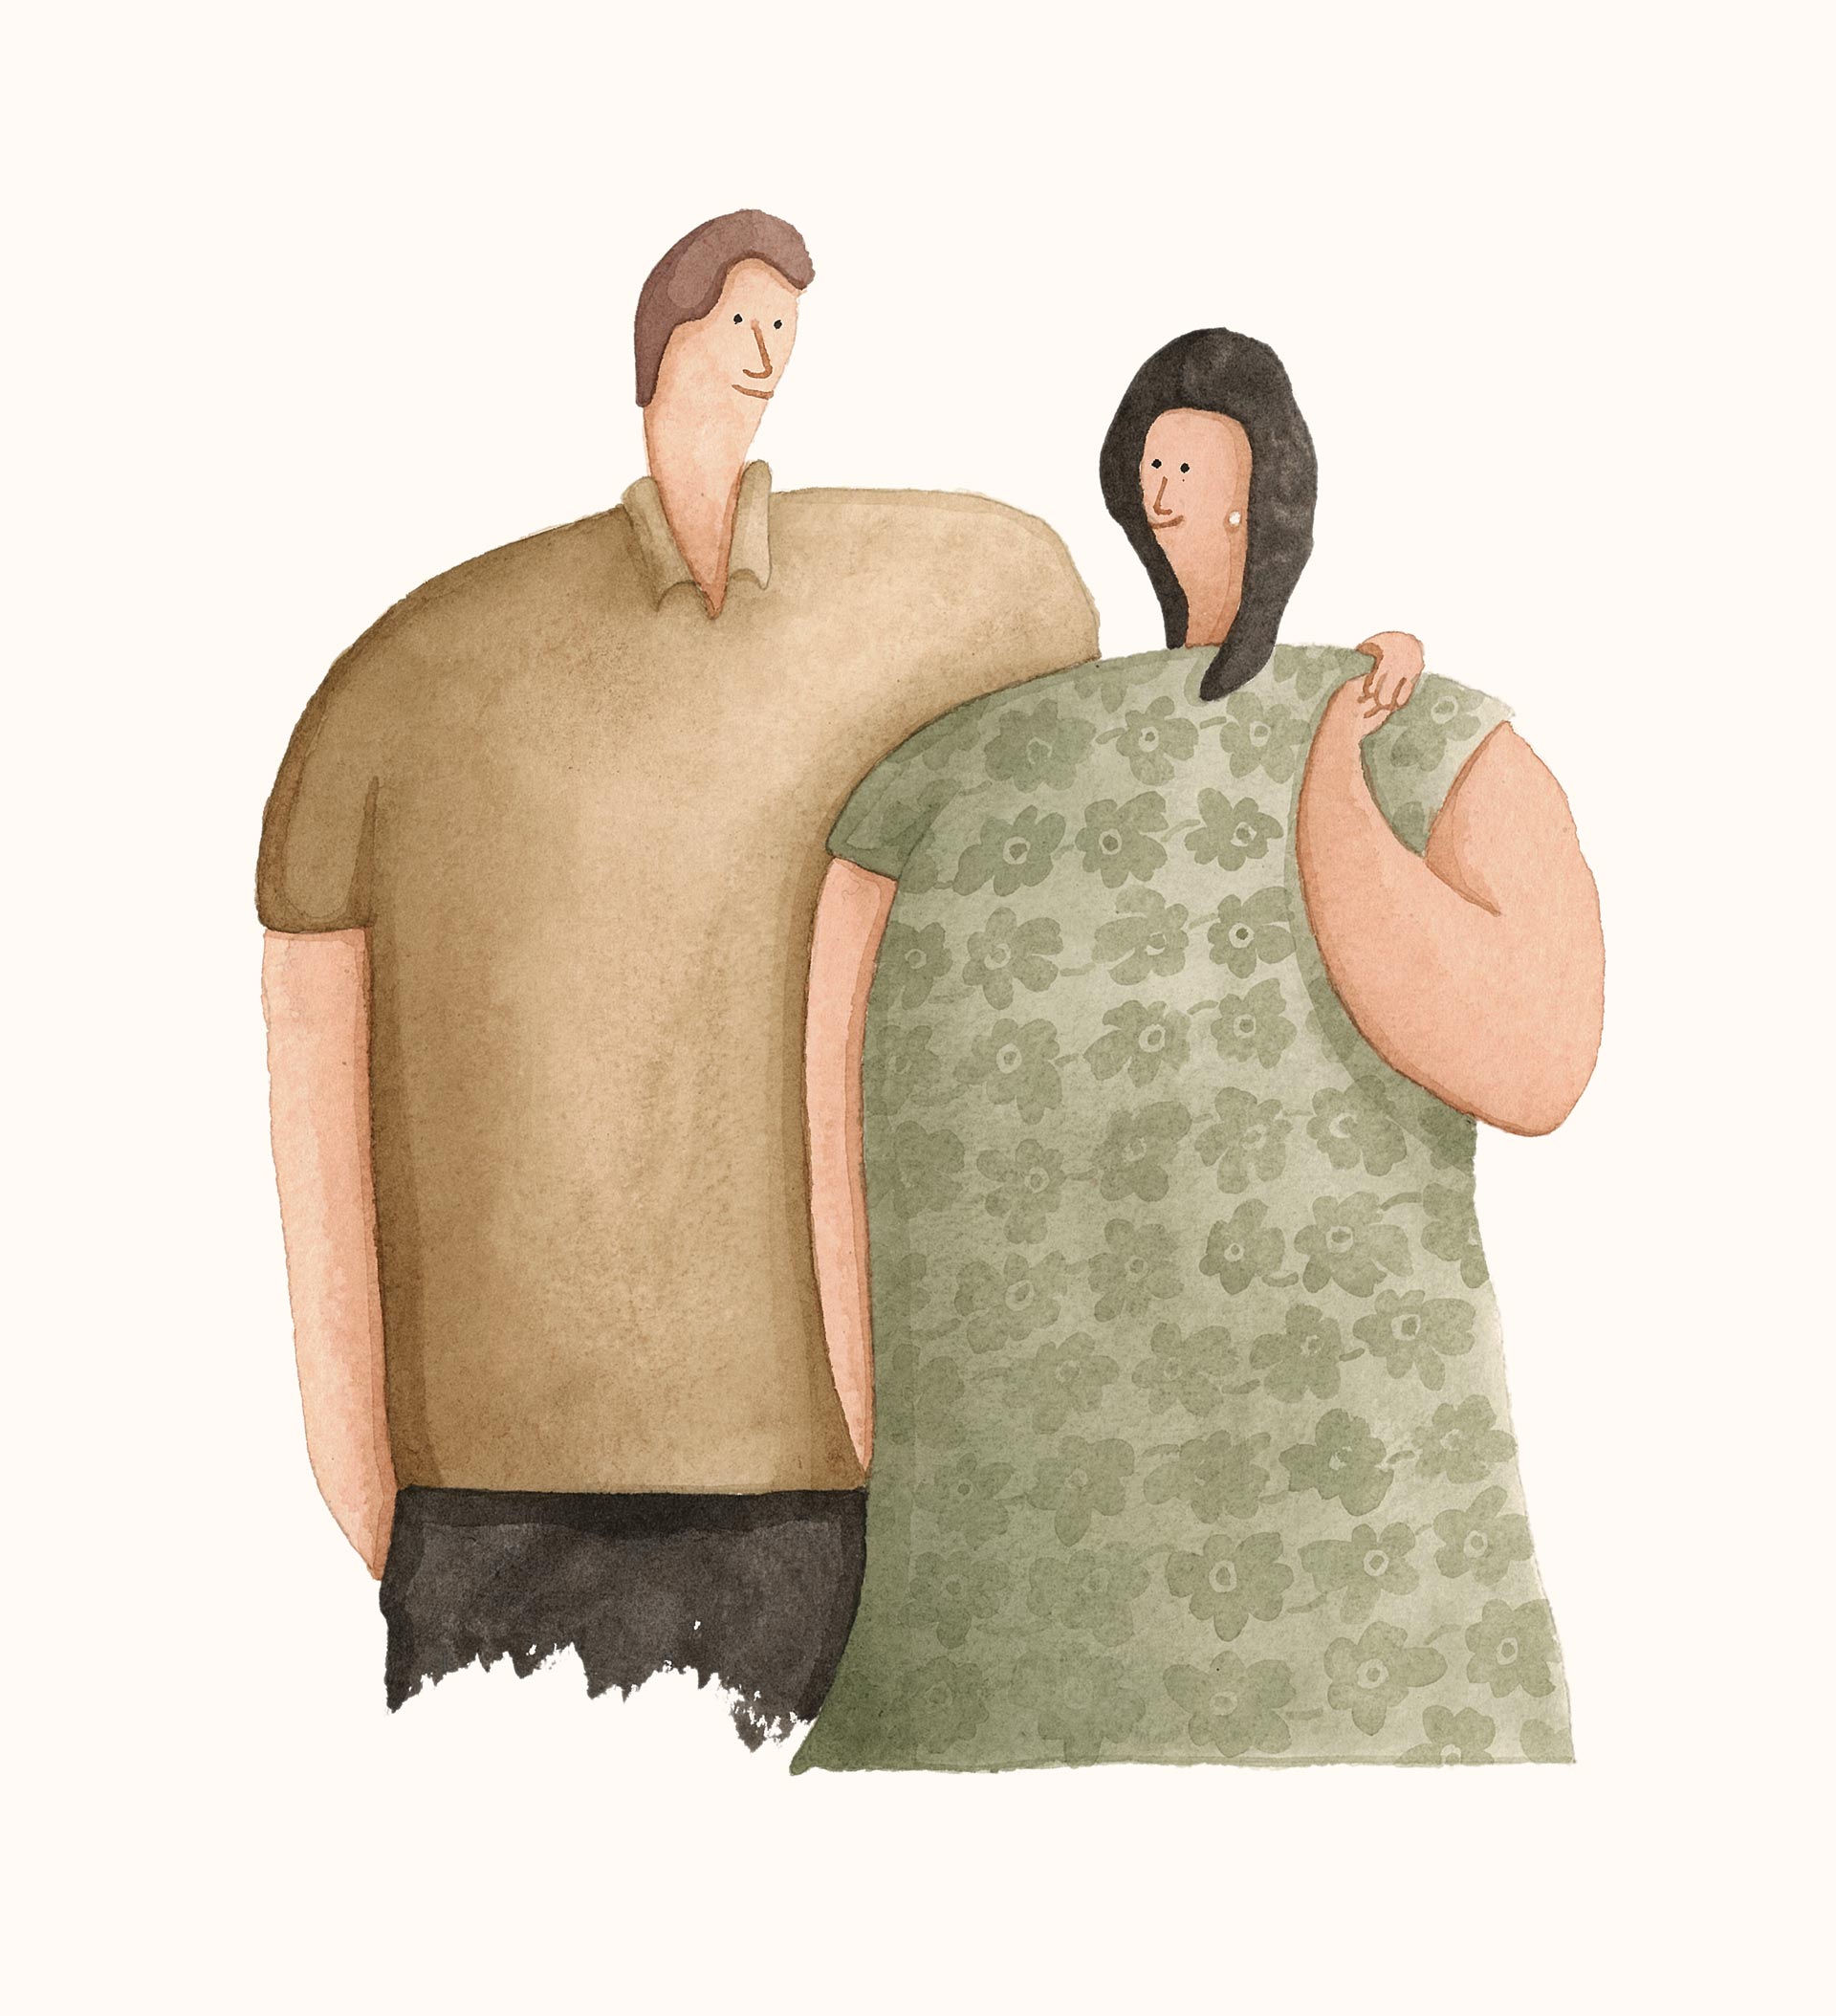 lashford-illustration_casual-couple